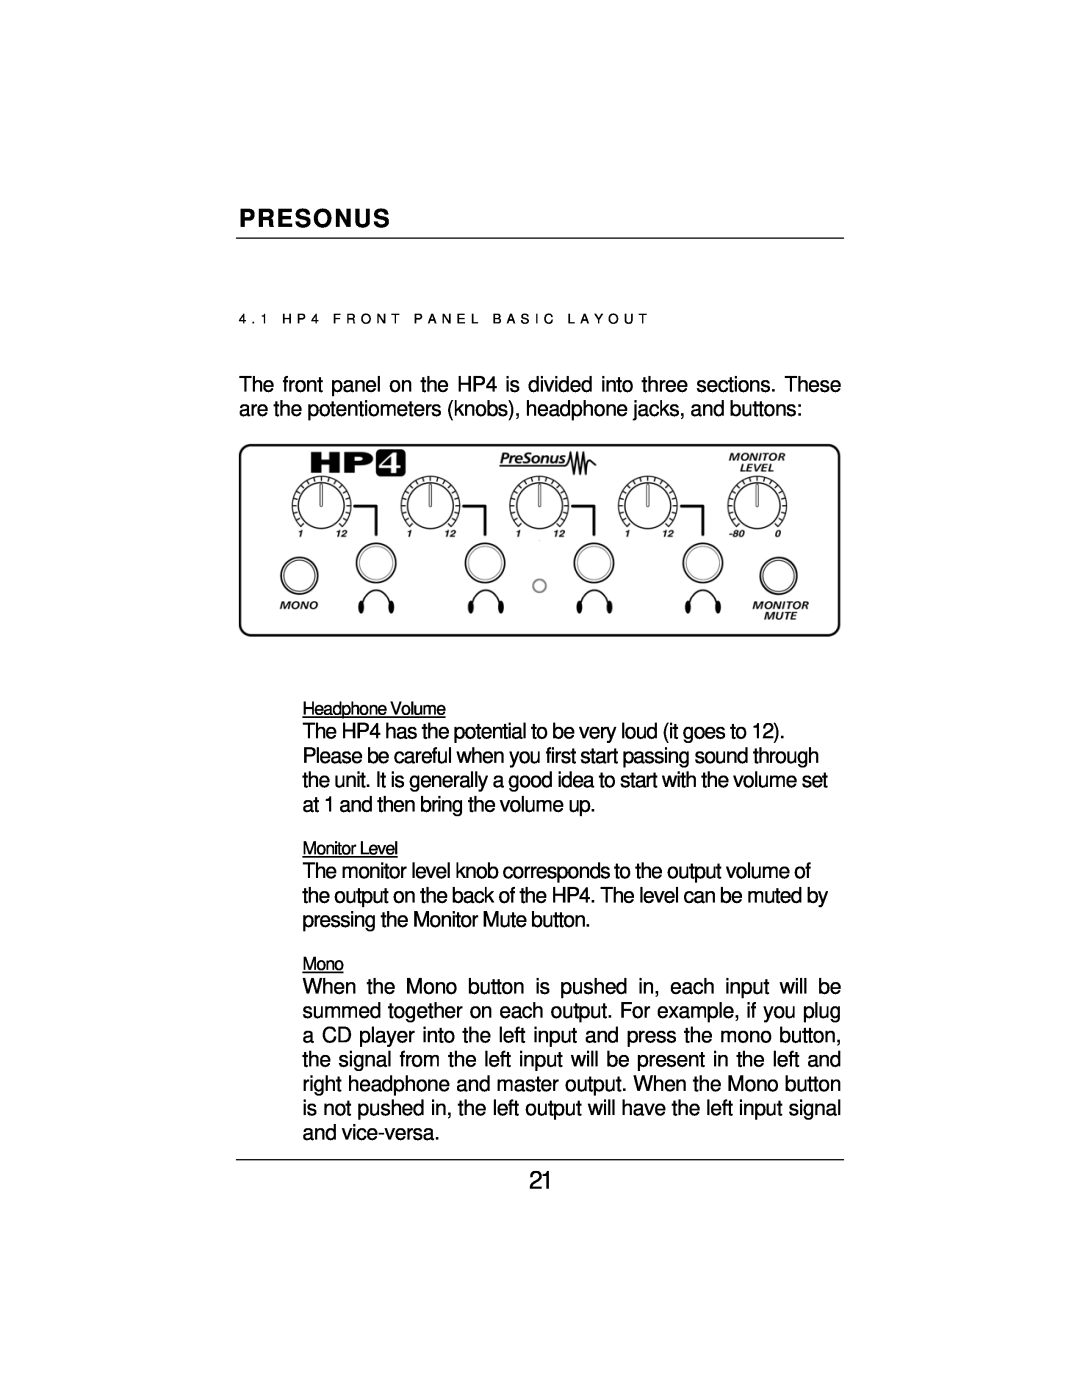 Presonus Audio electronic HP4, EQ3B, COMP16 user manual Presonus, Headphone Volume, Monitor Level, Mono 